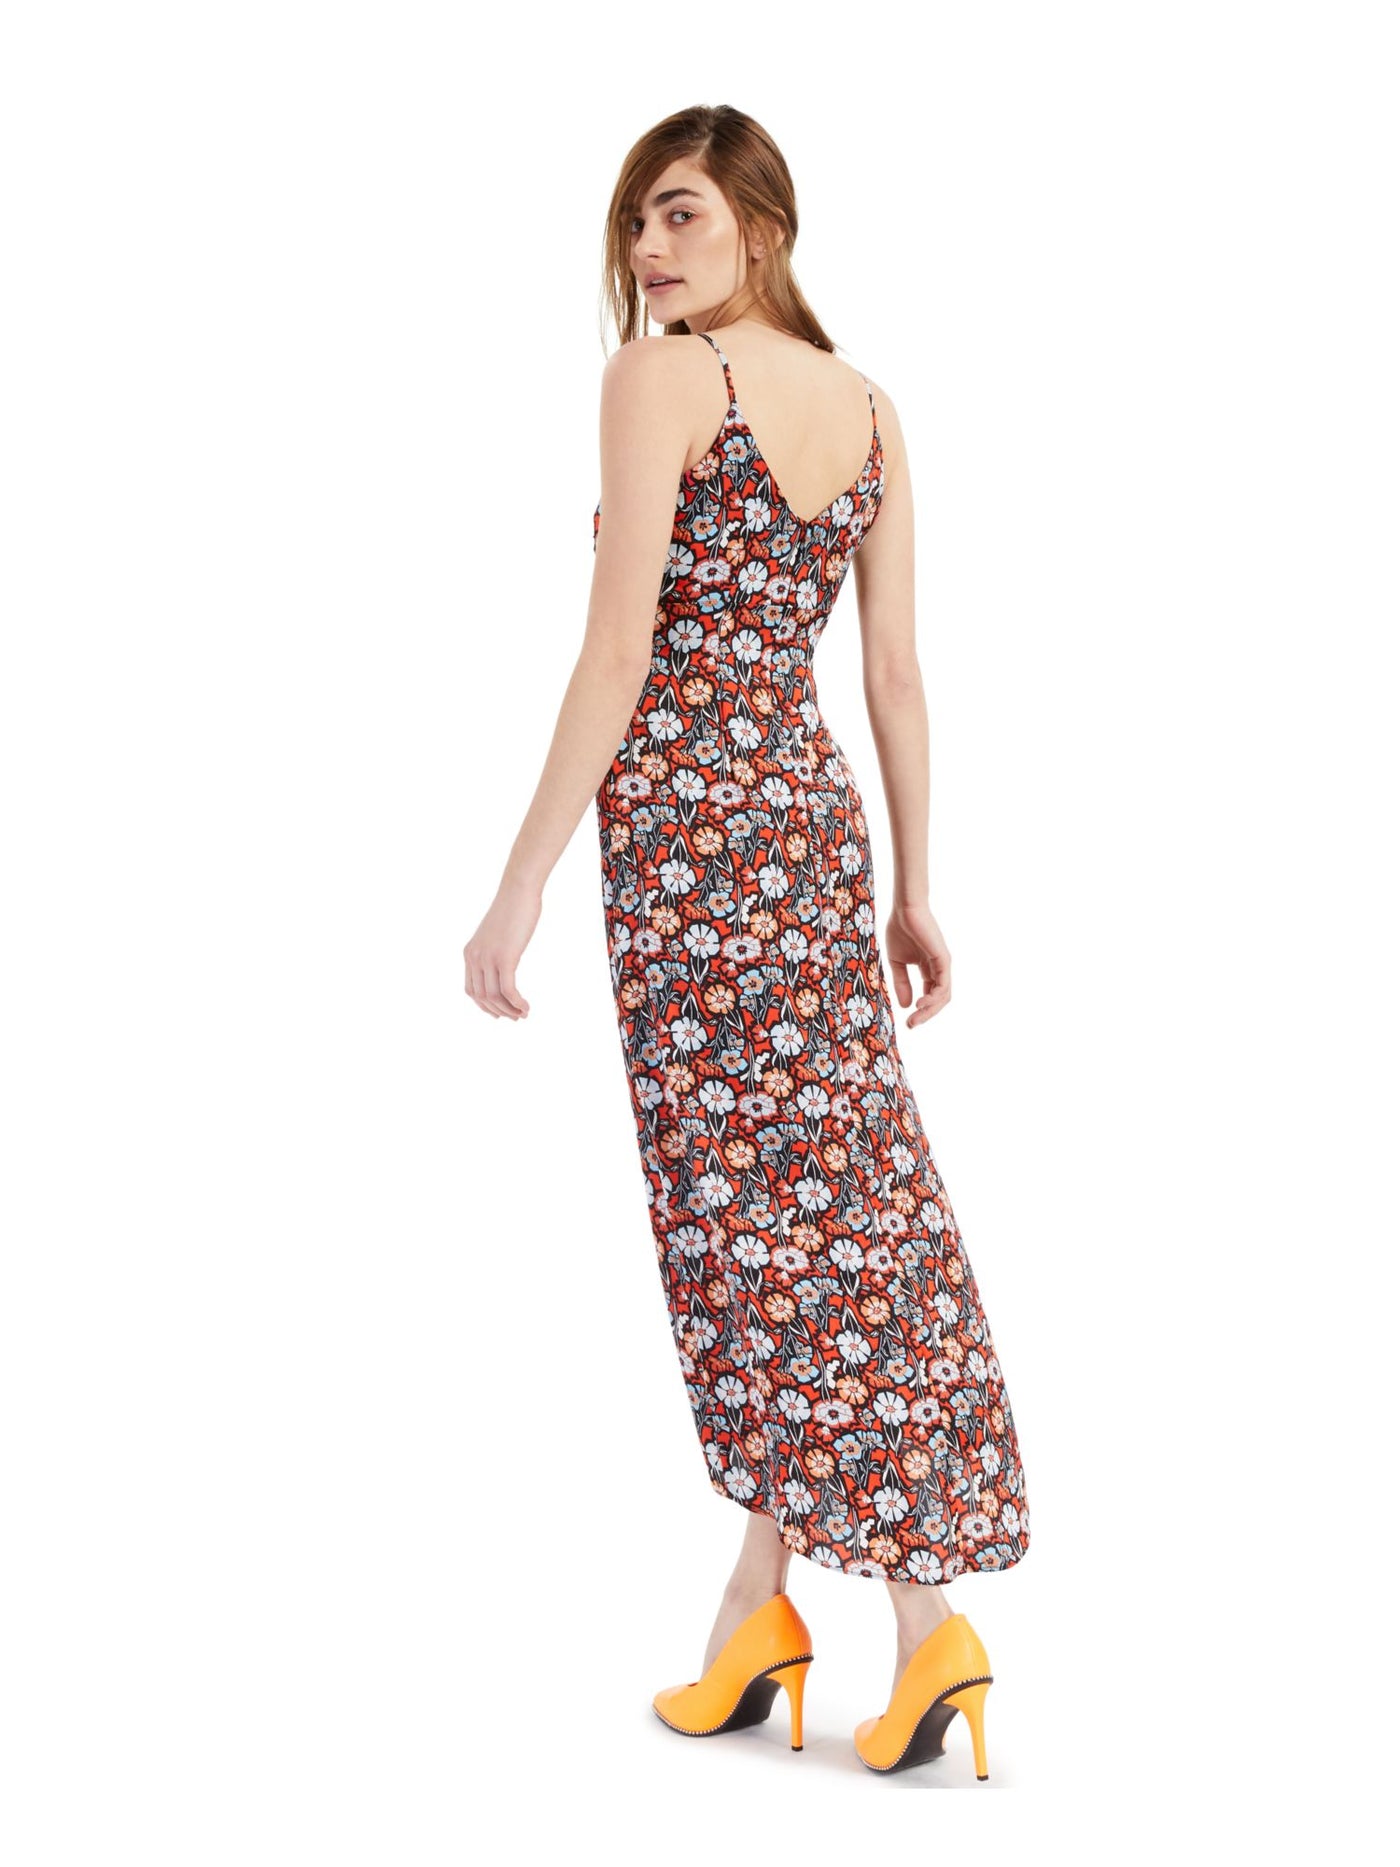 BAR III DRESSES Womens Twist Front V-back Tulip Hemline Spaghetti Strap Surplice Neckline Midi Party Faux Wrap Dress